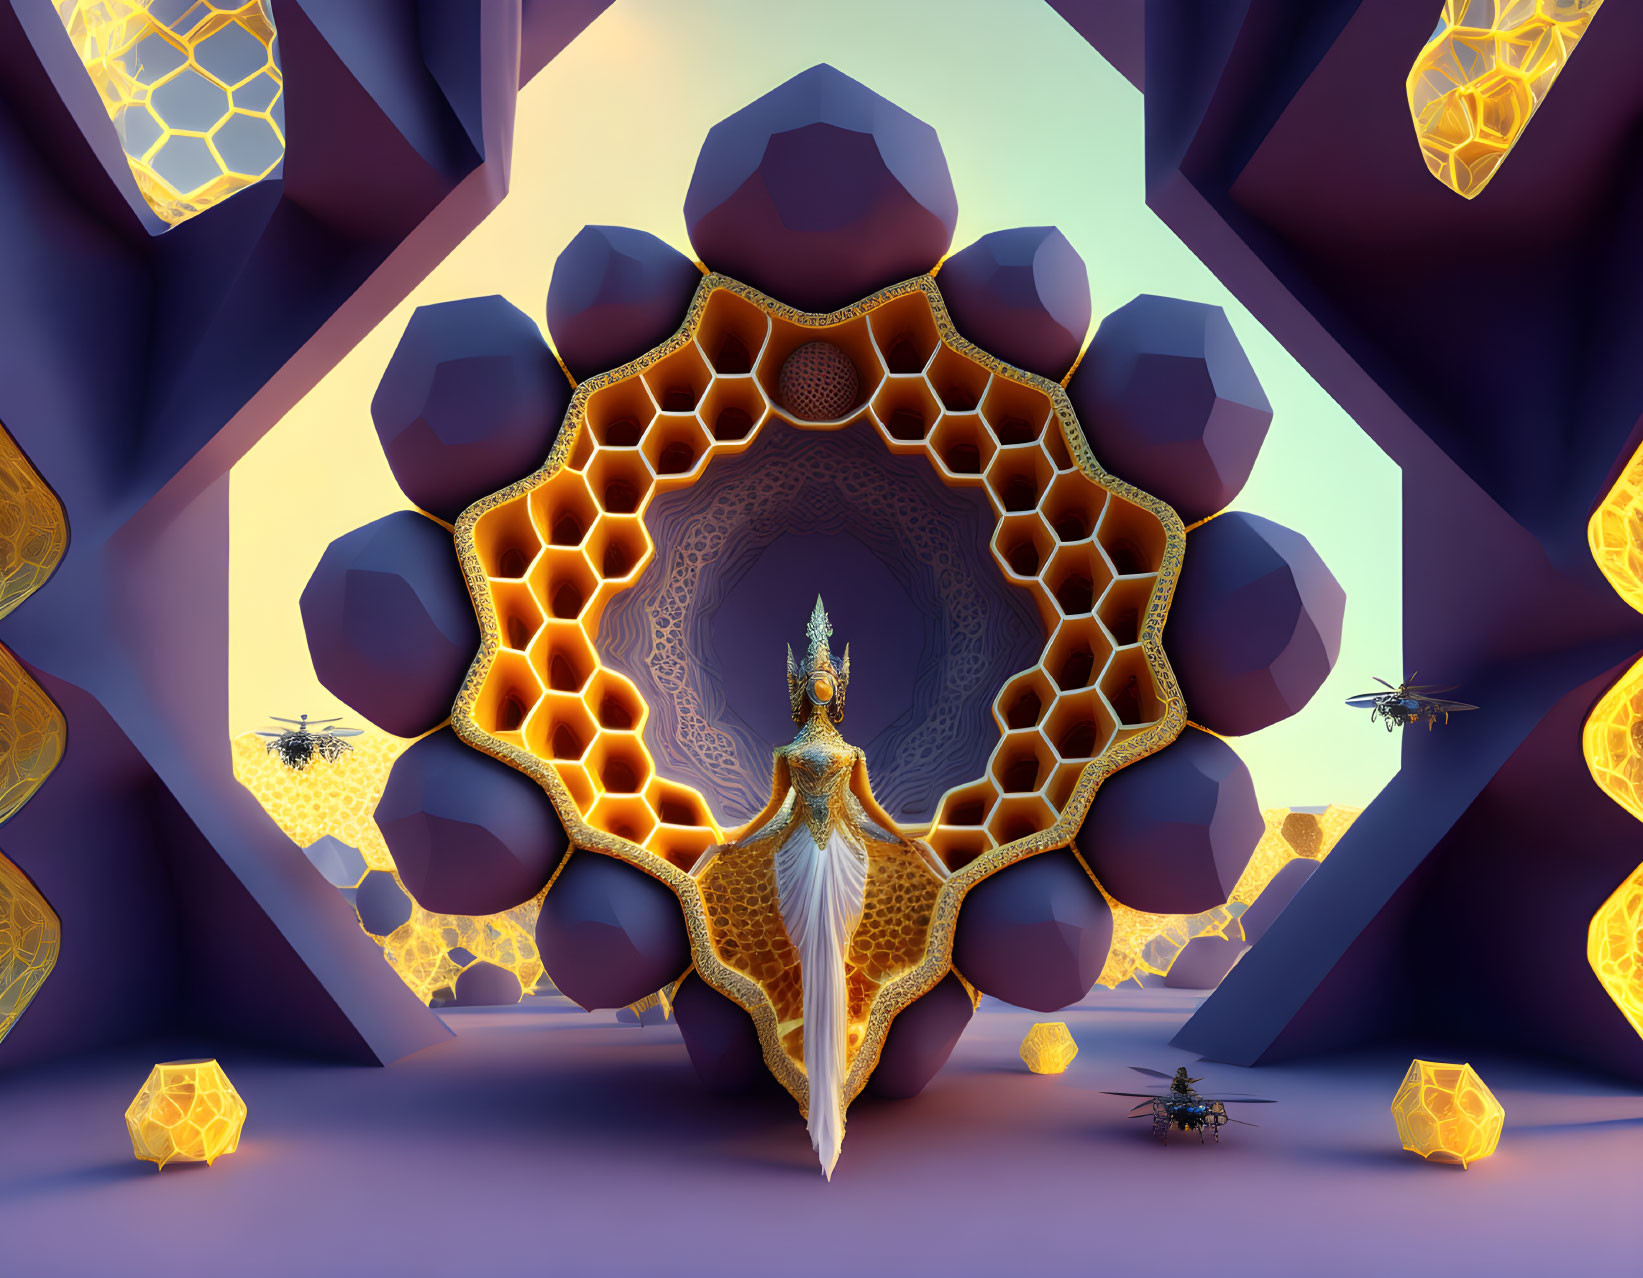 Insectoid goddess inside infinite honeycomb